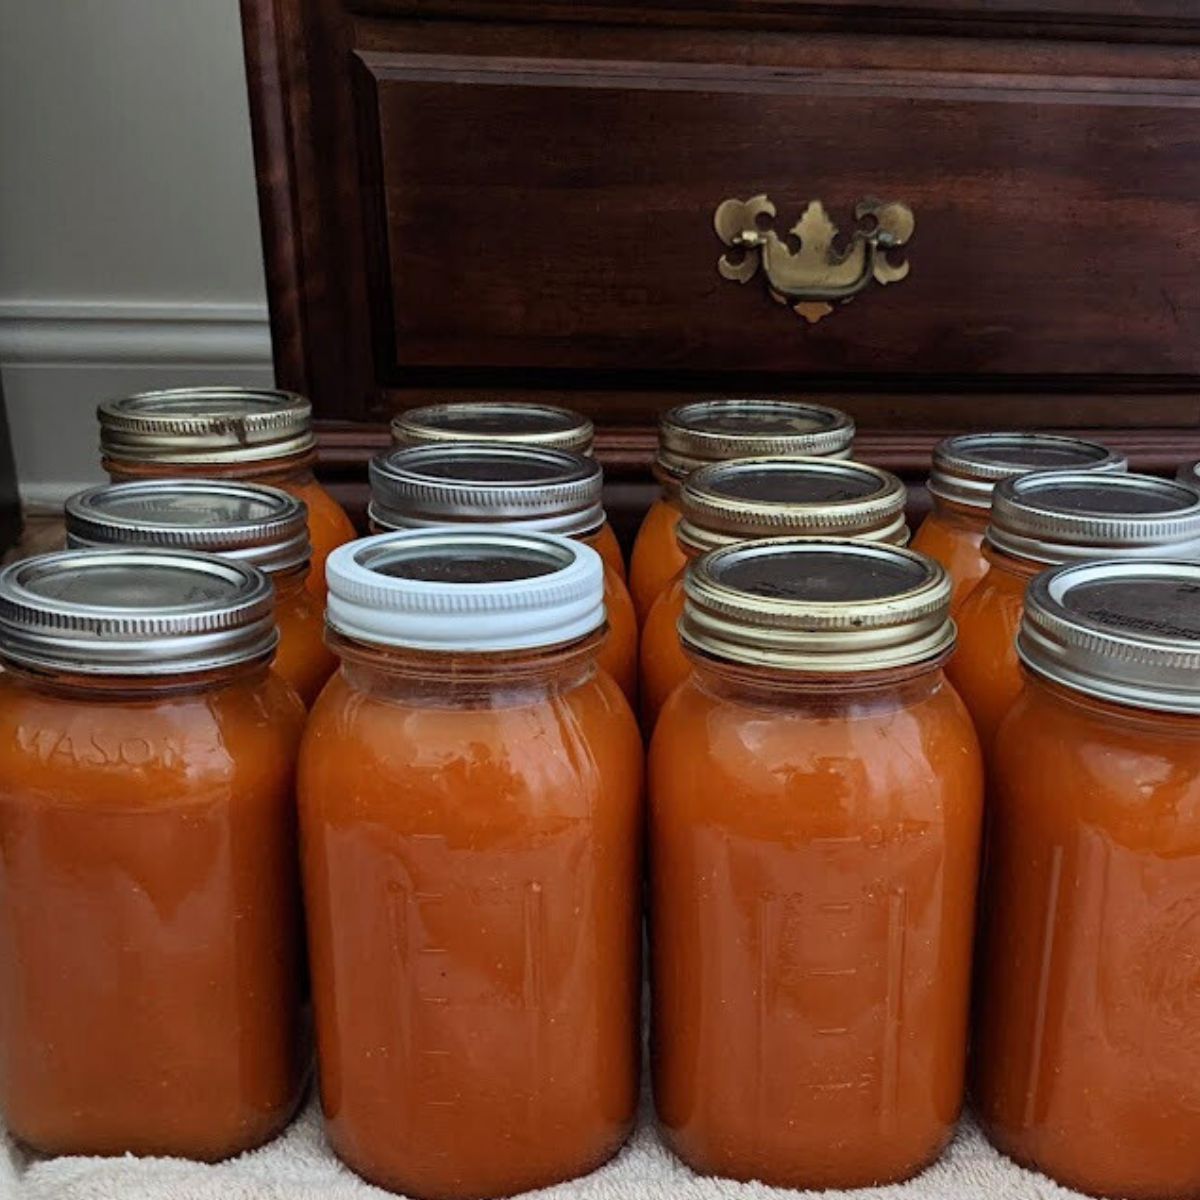 Jars of canned tomato juice.